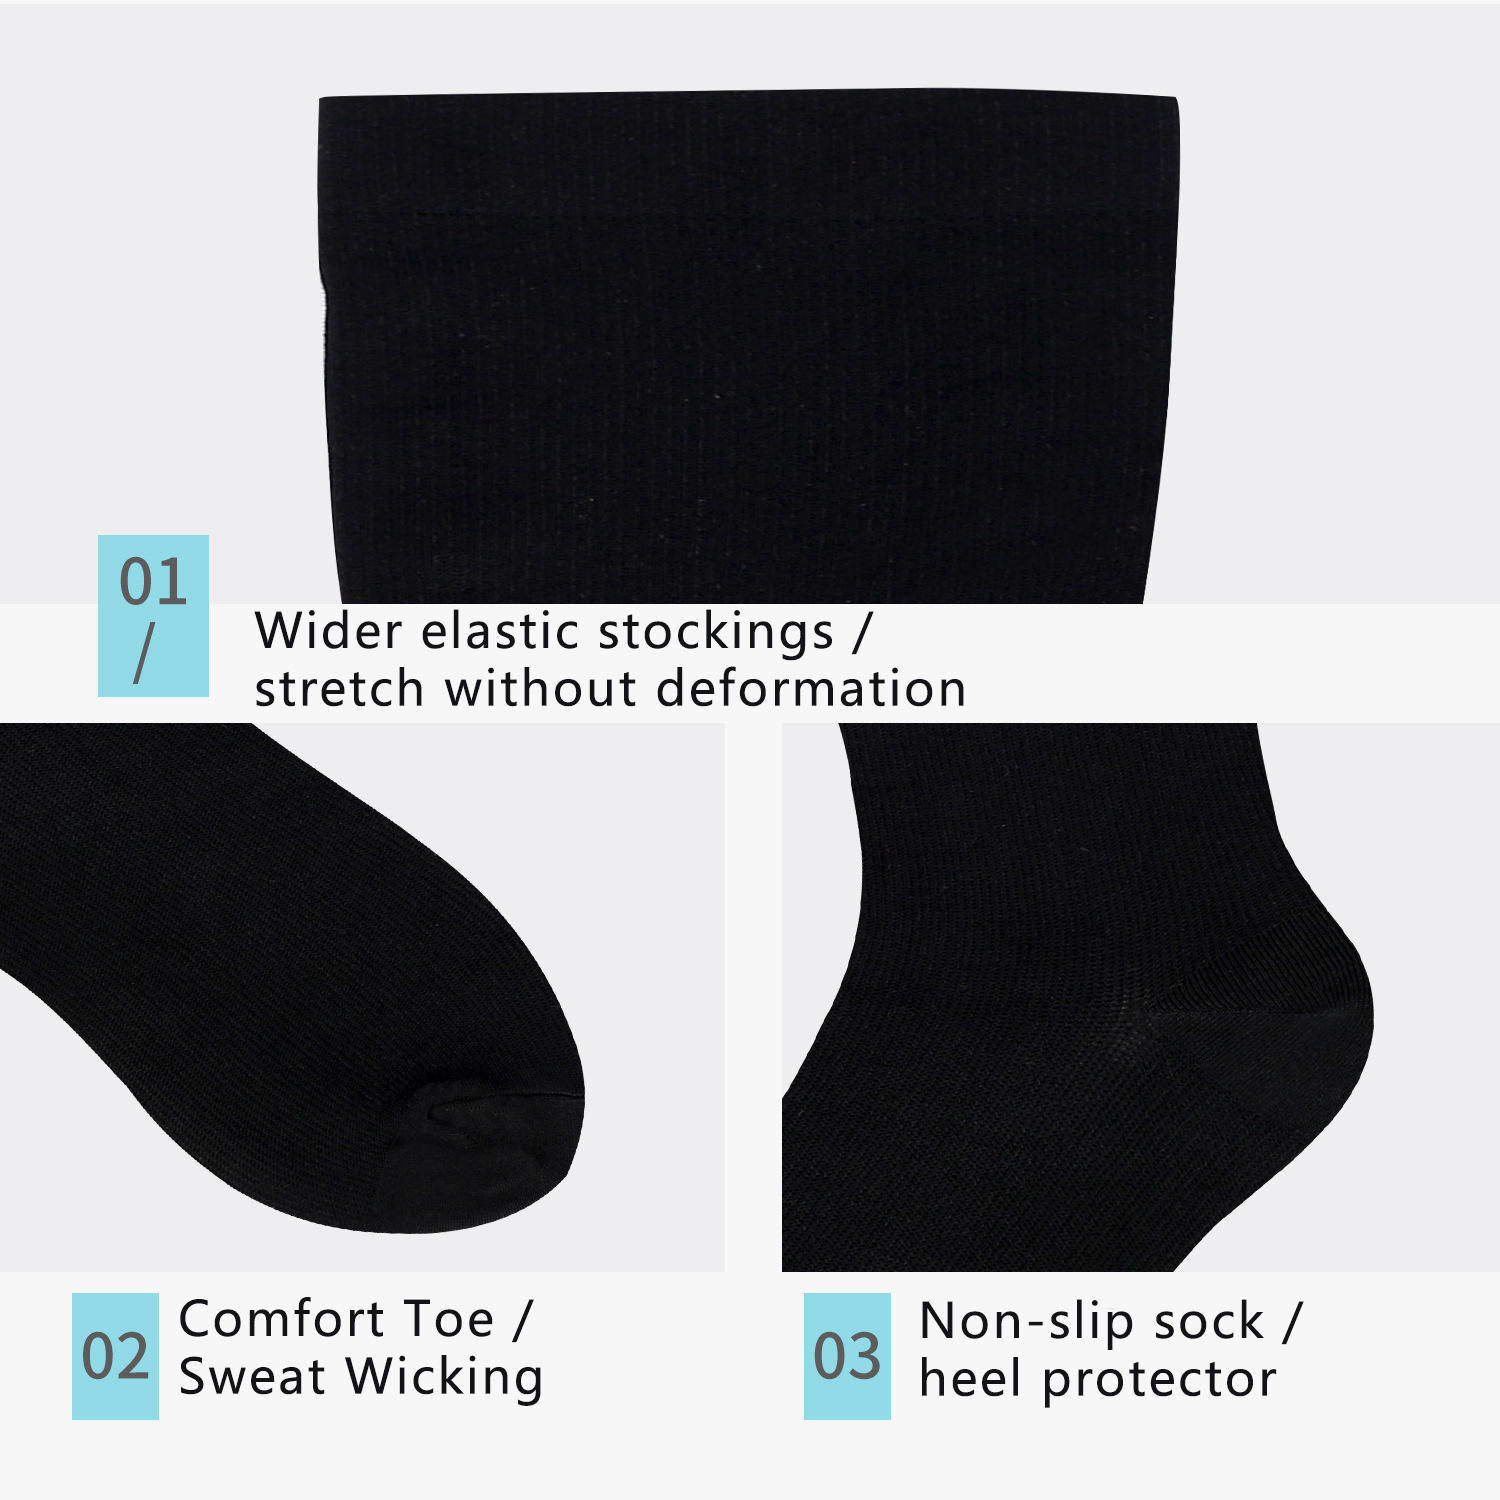 OEM custom design knee high compression socks plus size oversized socks